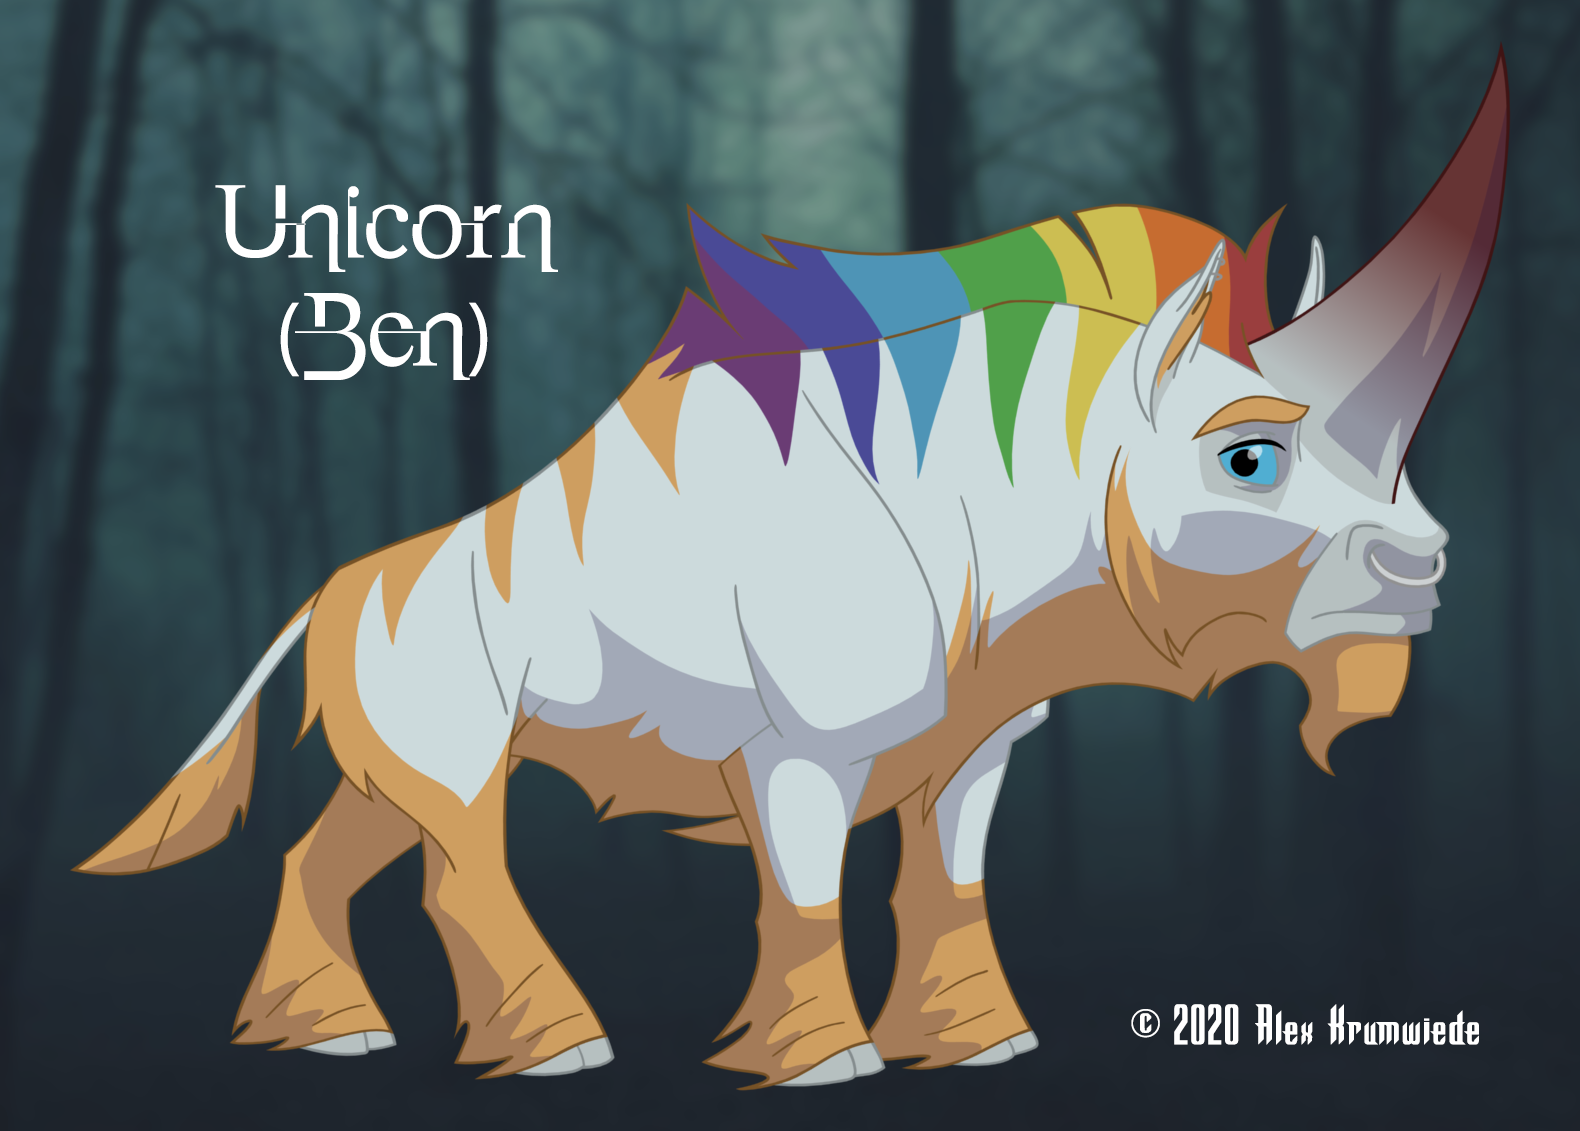 Unicorn (Ben)